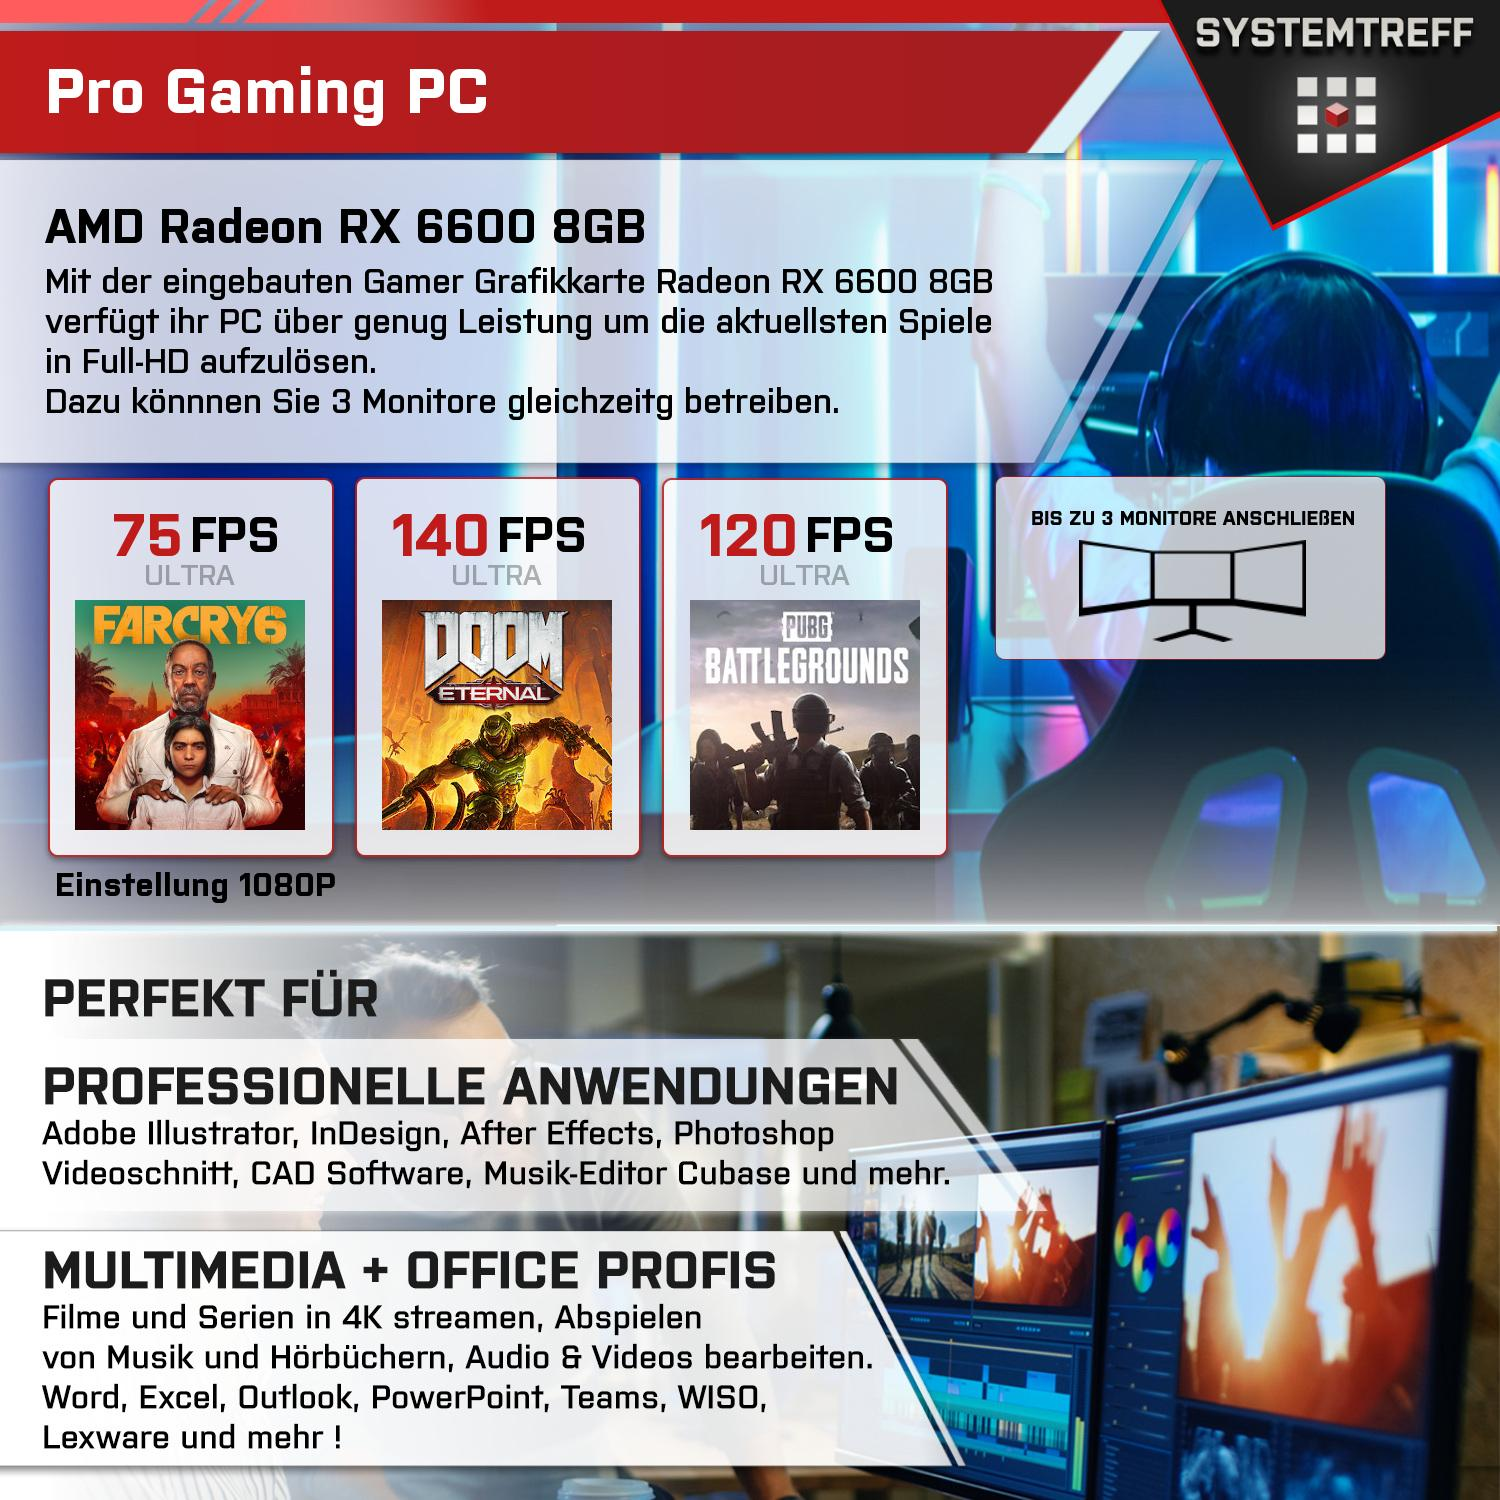 6600 16 mit 5 PC Ryzen SYSTEMTREFF RX AMD 512 AMD Prozessor, Pro, GB Ryzen™ Radeon™ AMD 7500F, GB Gaming RAM, mSSD, Gaming Windows 5 11